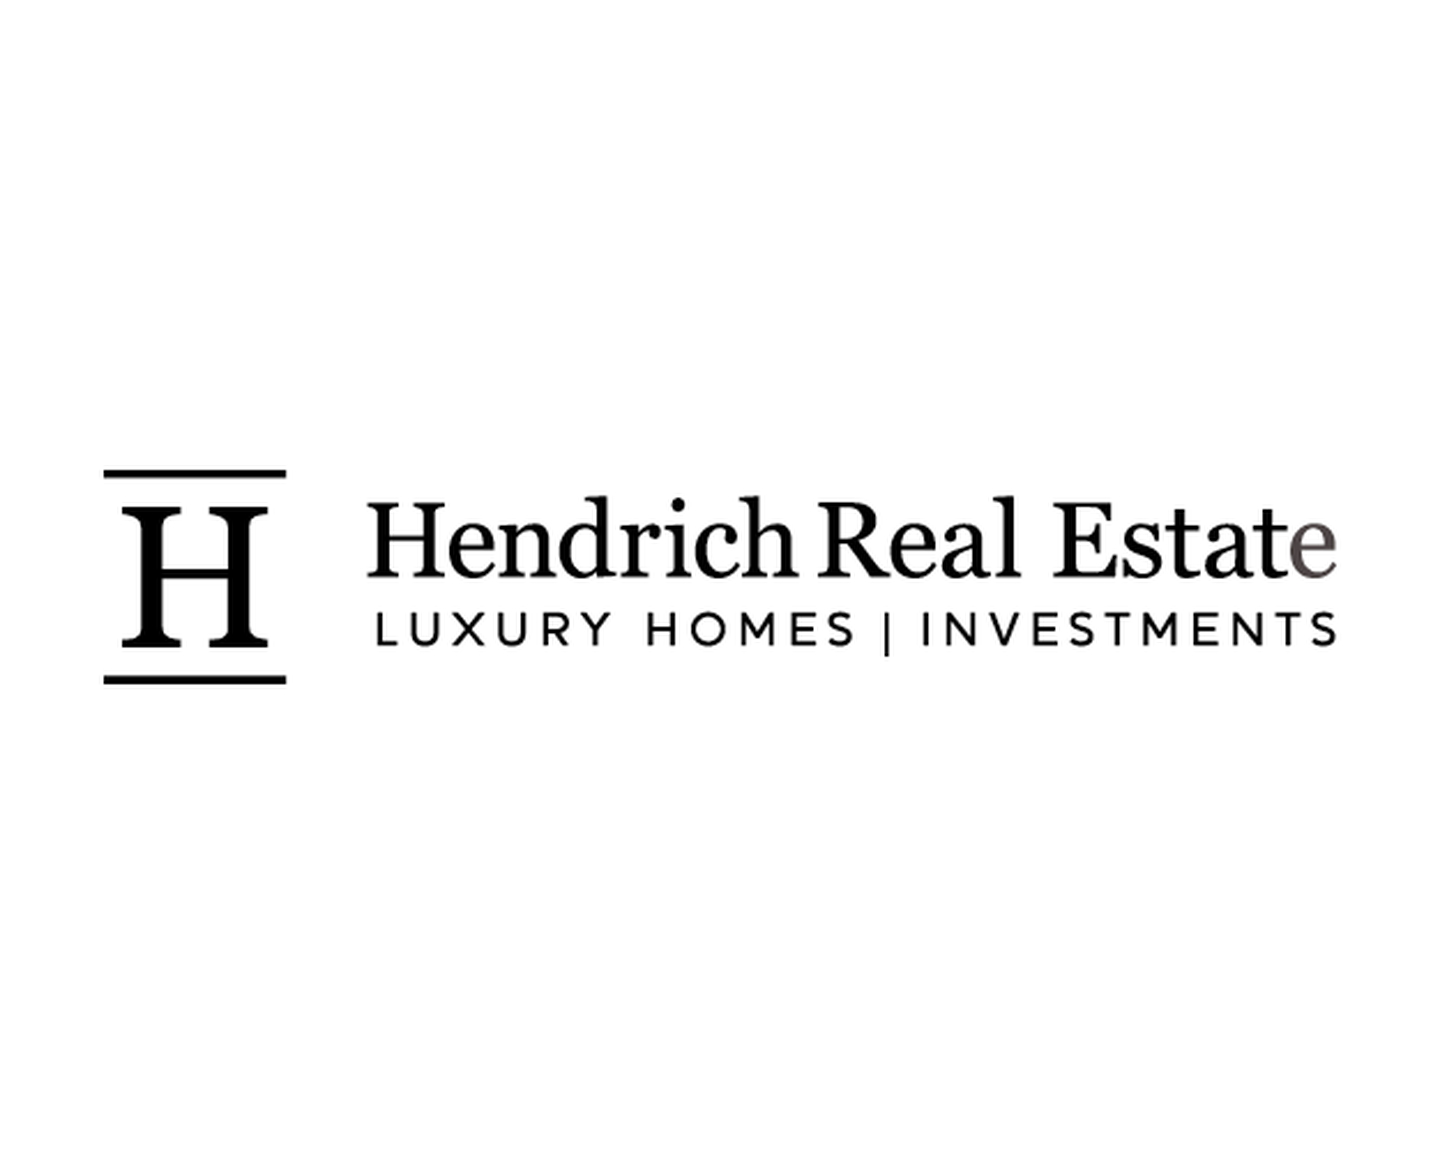 Hendrich Real Estate Logo